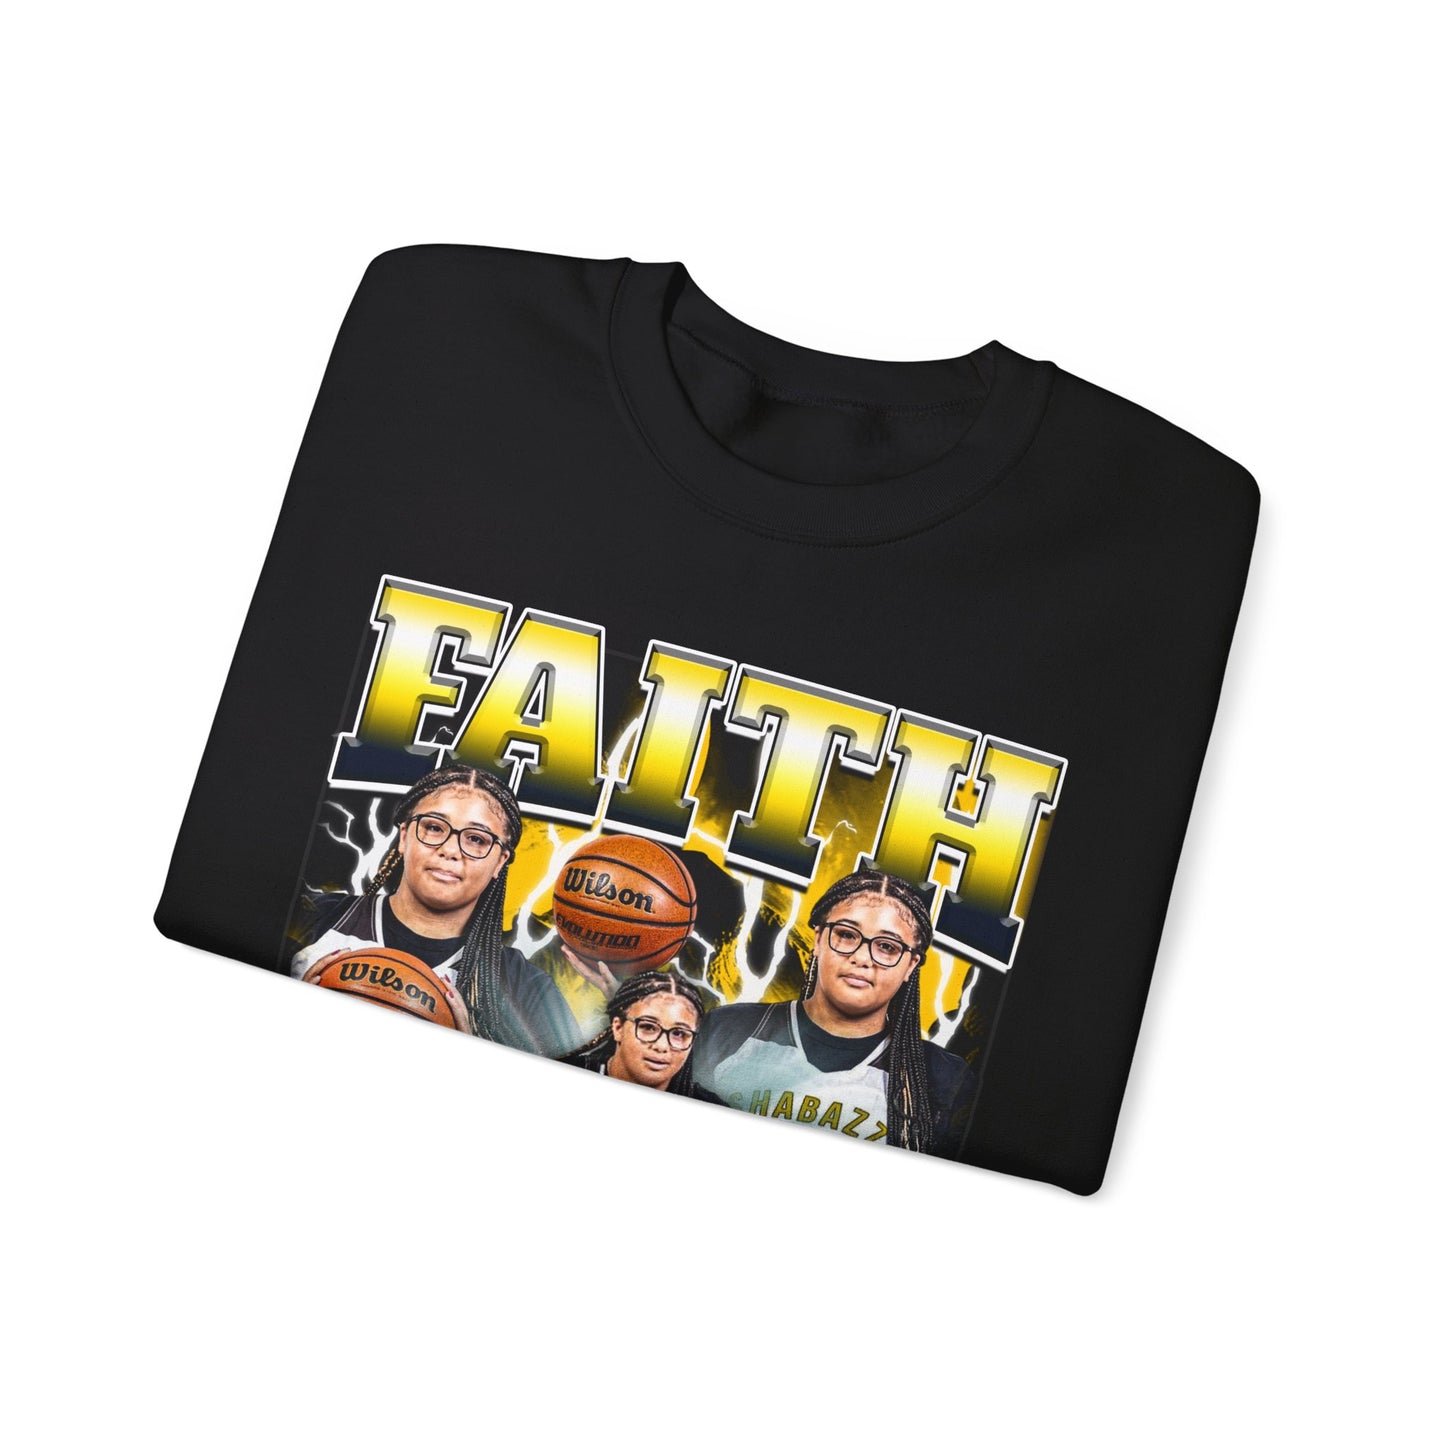 Faith Gray Crewneck Sweatshirt